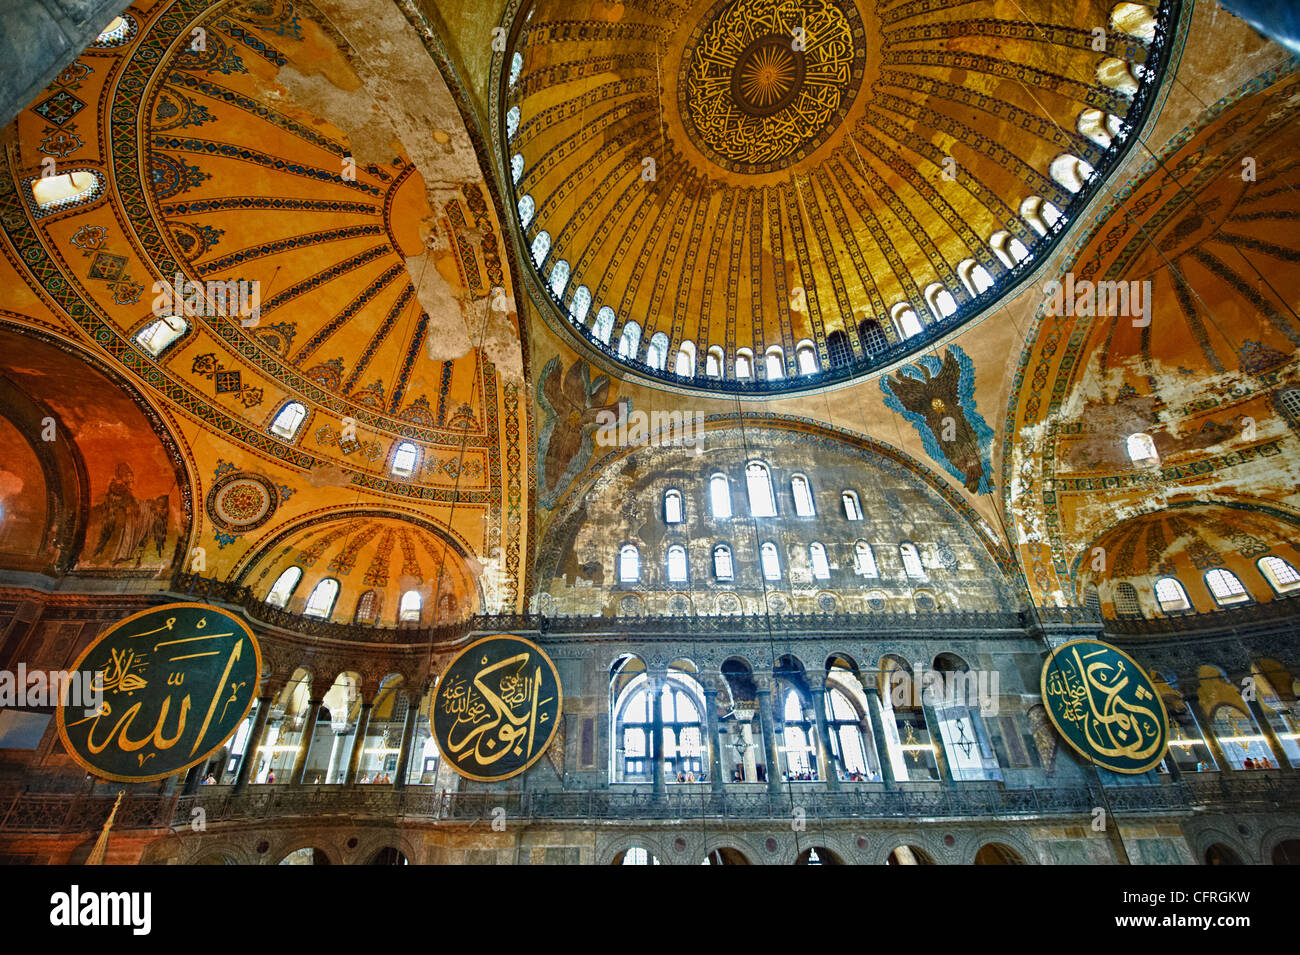 The Islamic decoration on the domes of the interior of Hagia Sophia ( Ayasofya ) , Istanbul, Turkey Stock Photo